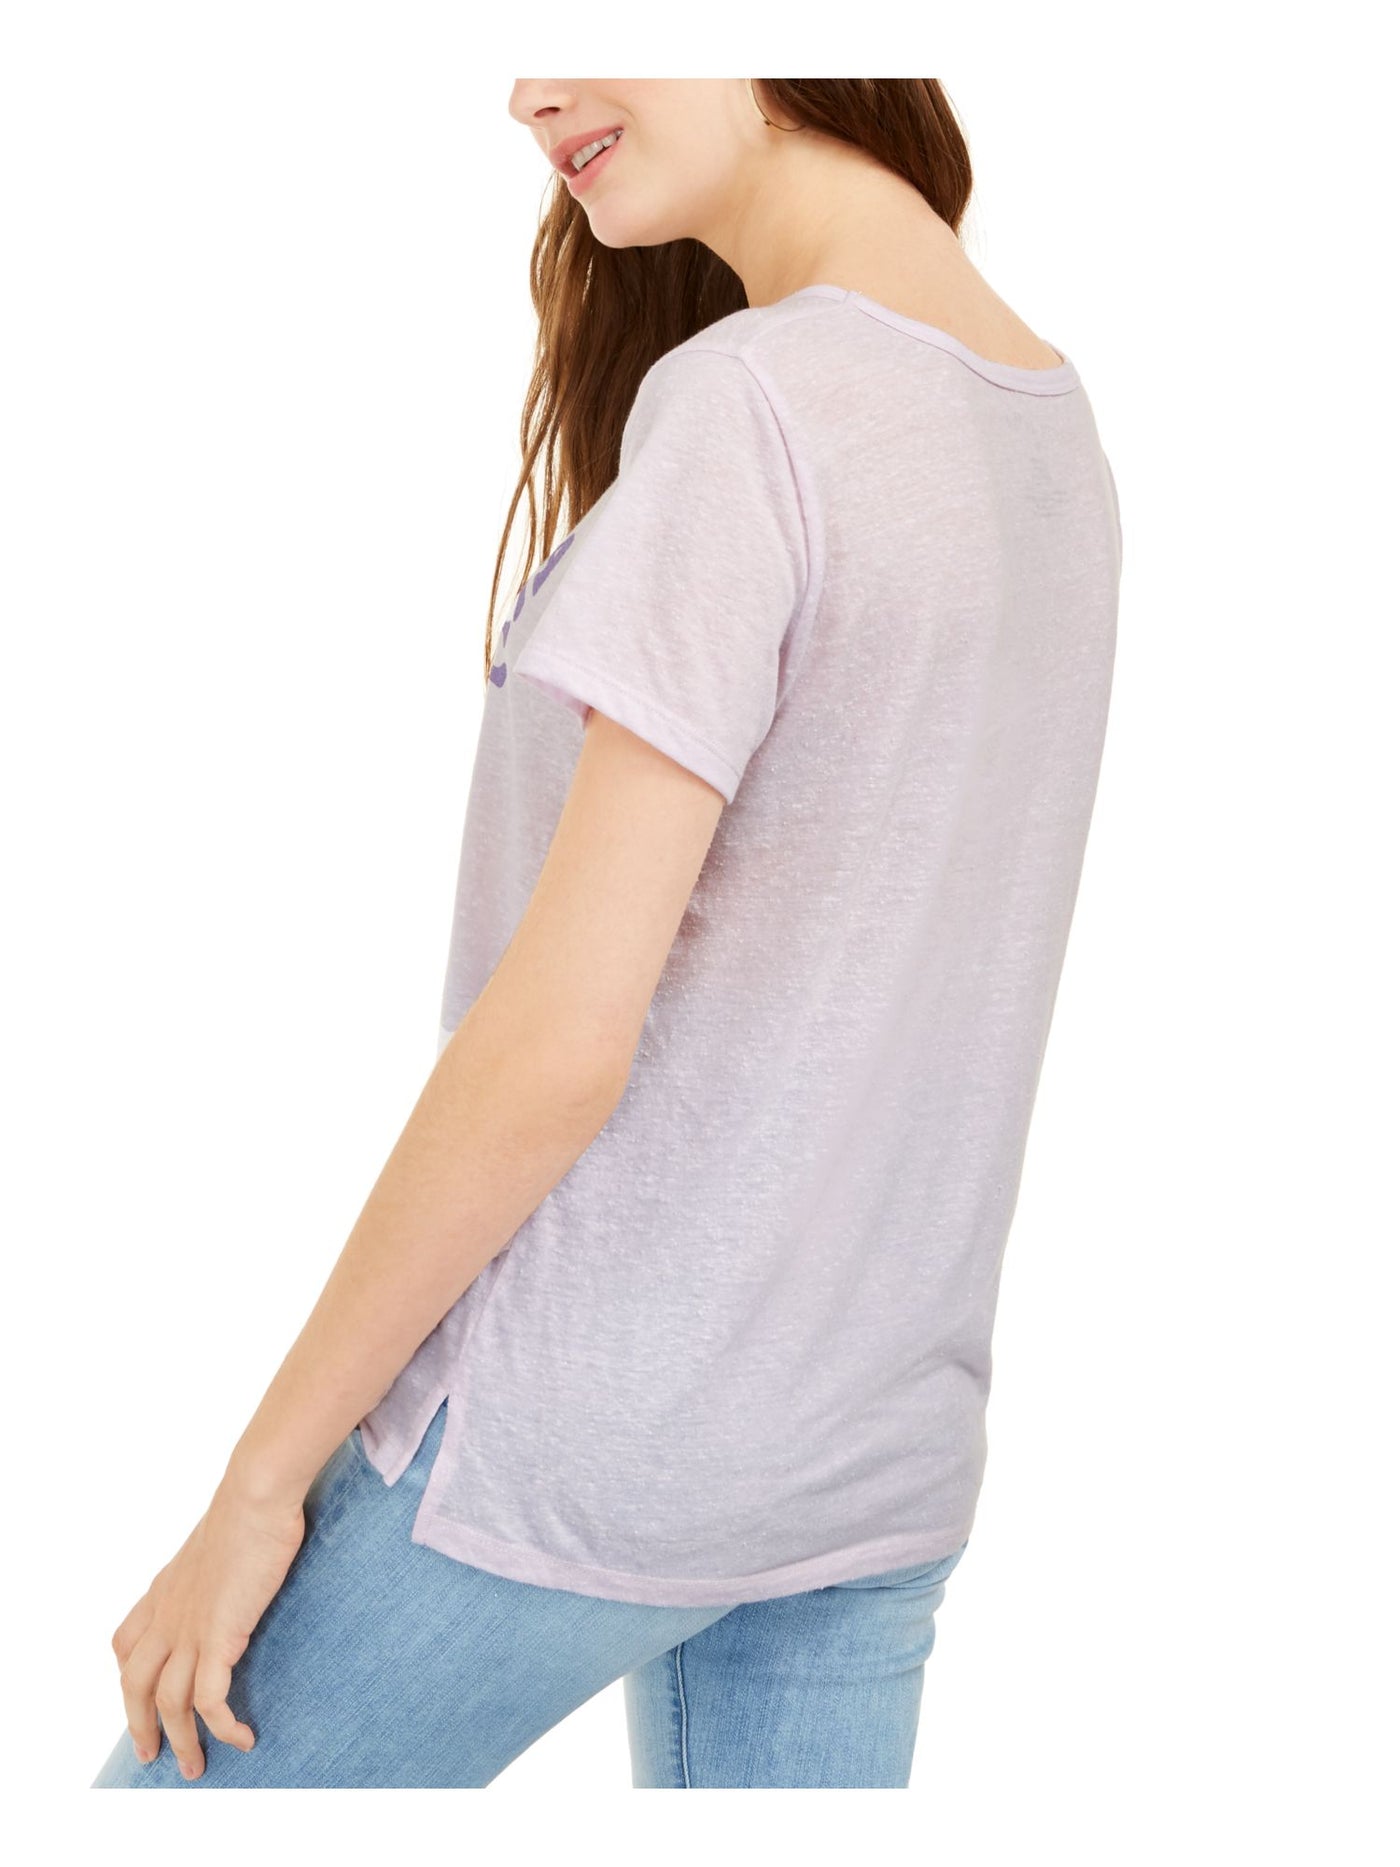 LOVE TRIBE Womens Short Sleeve Jewel Neck T-Shirt